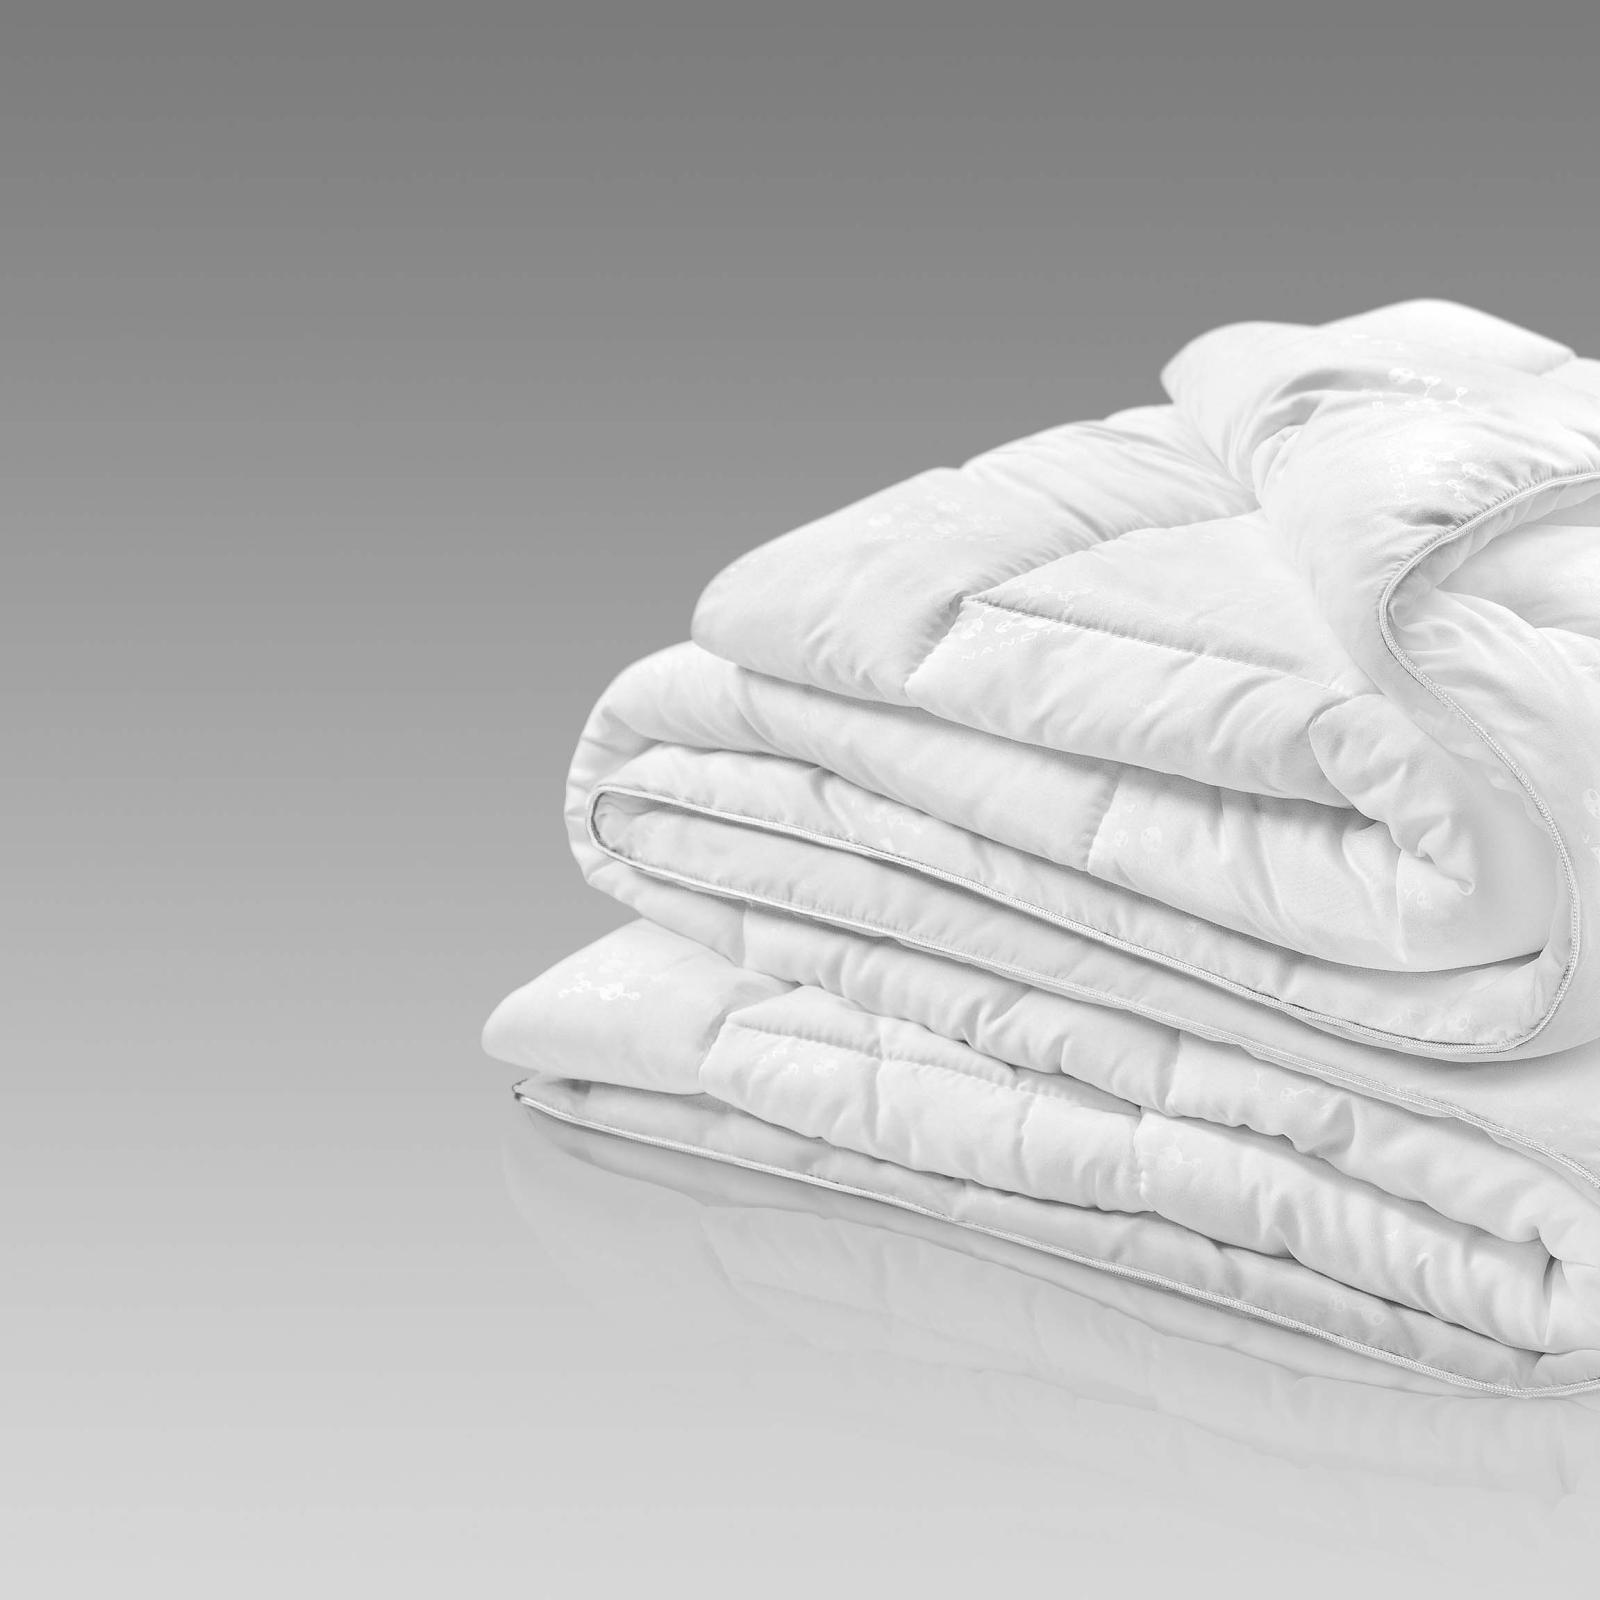 Одеяло Гелиос 200х210 Togas, цвет белый, размер 200х210 см - фото 9